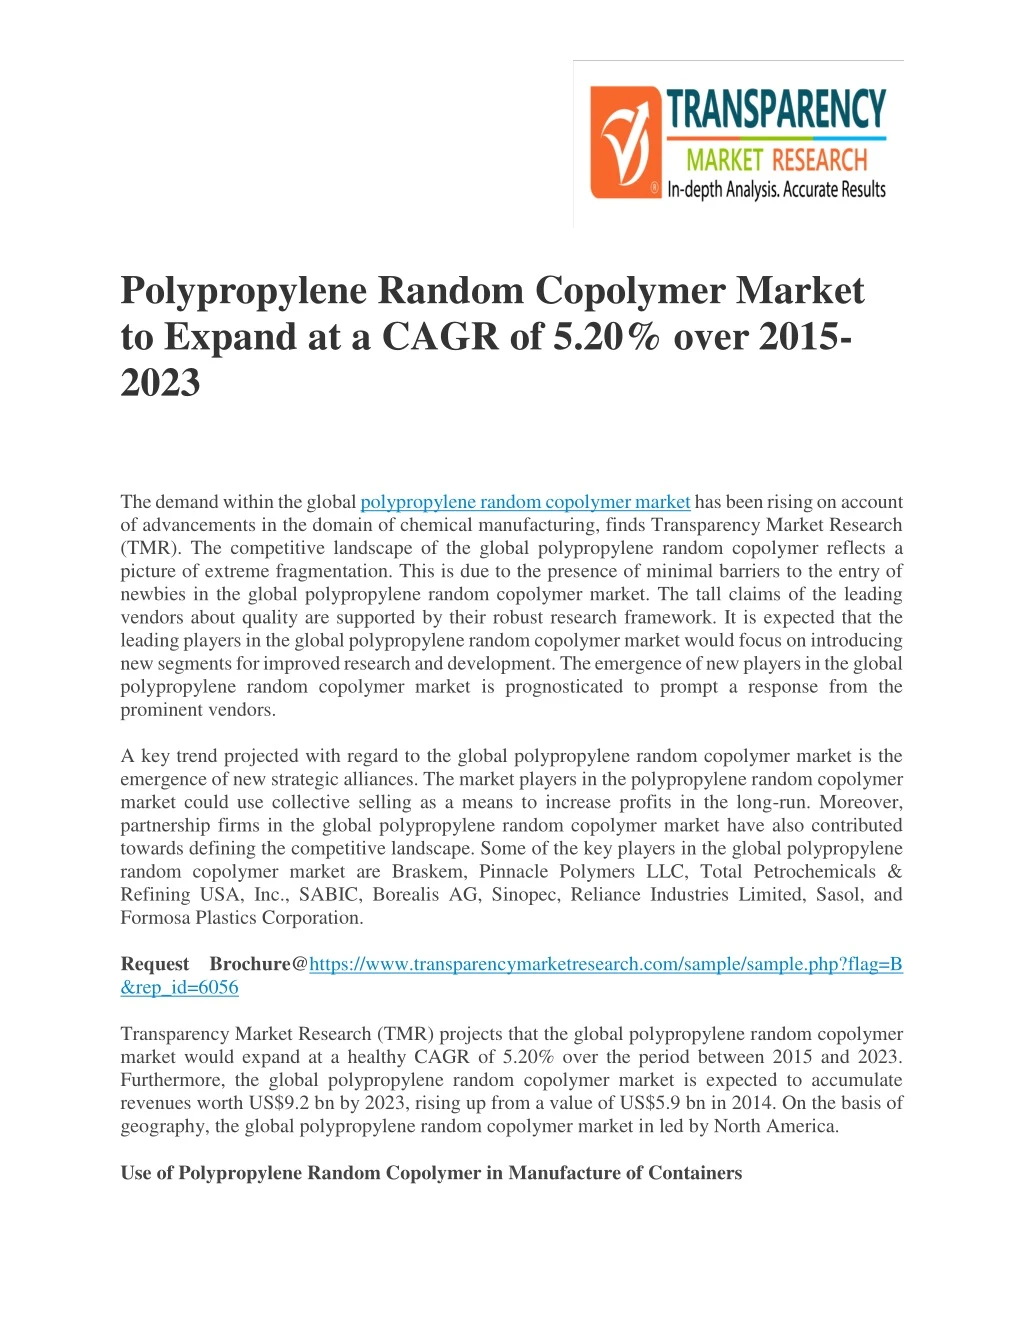 polypropylene random copolymer market to expand